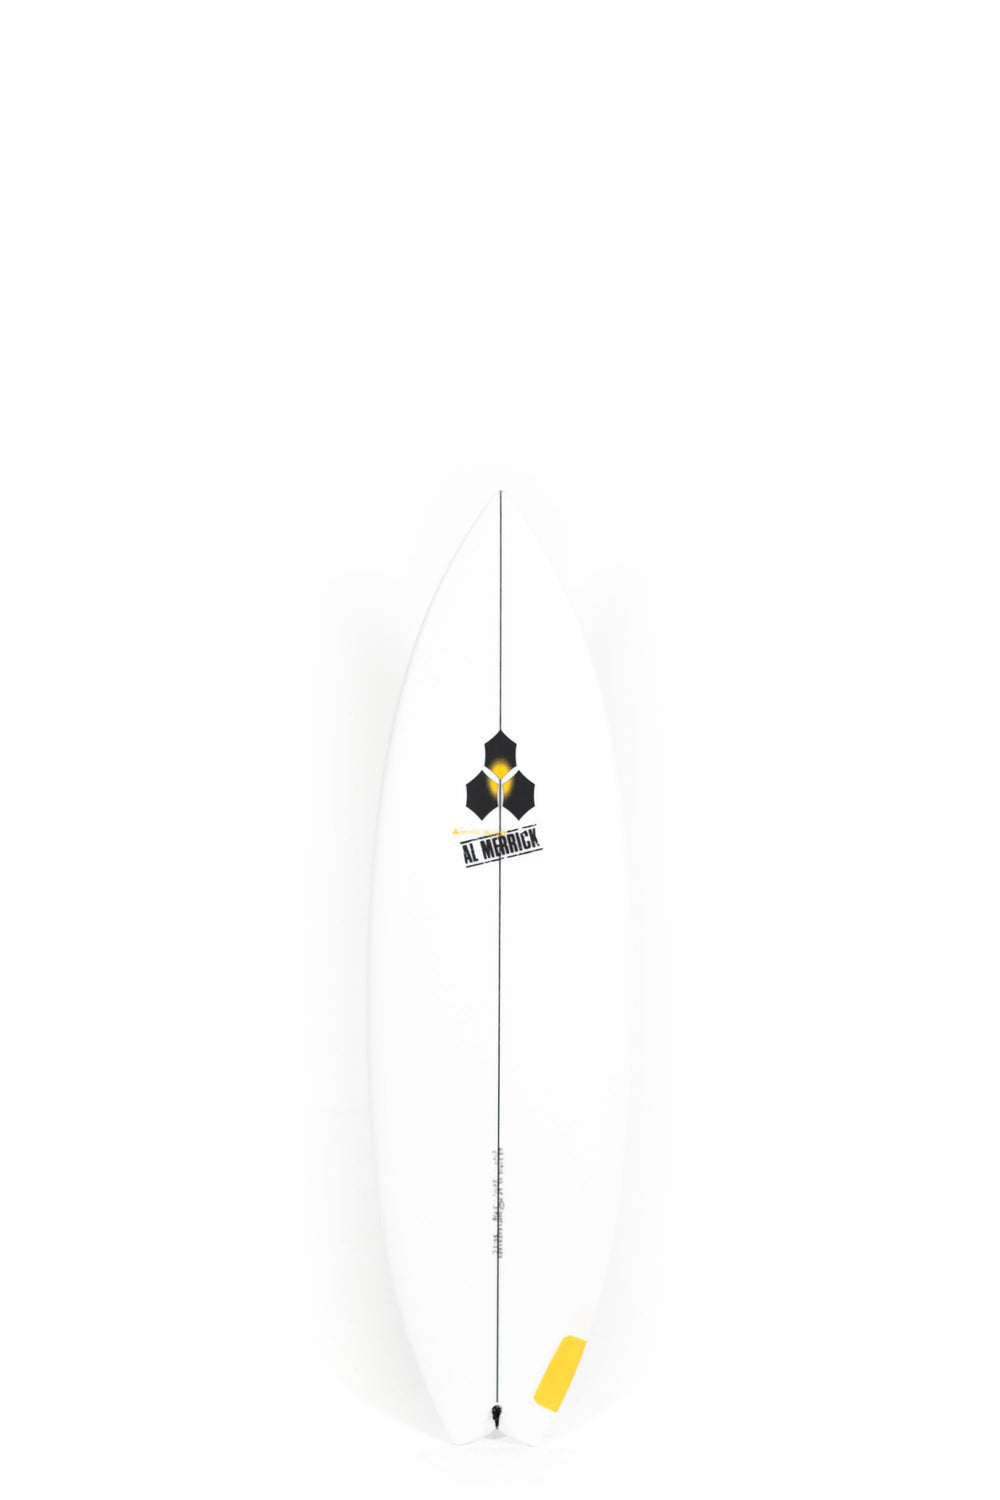 Pukas-Surf-Shop-Channel-Island-Surfboards-Happy-Every-Day-Al-Merrick-6_0_-CI31910